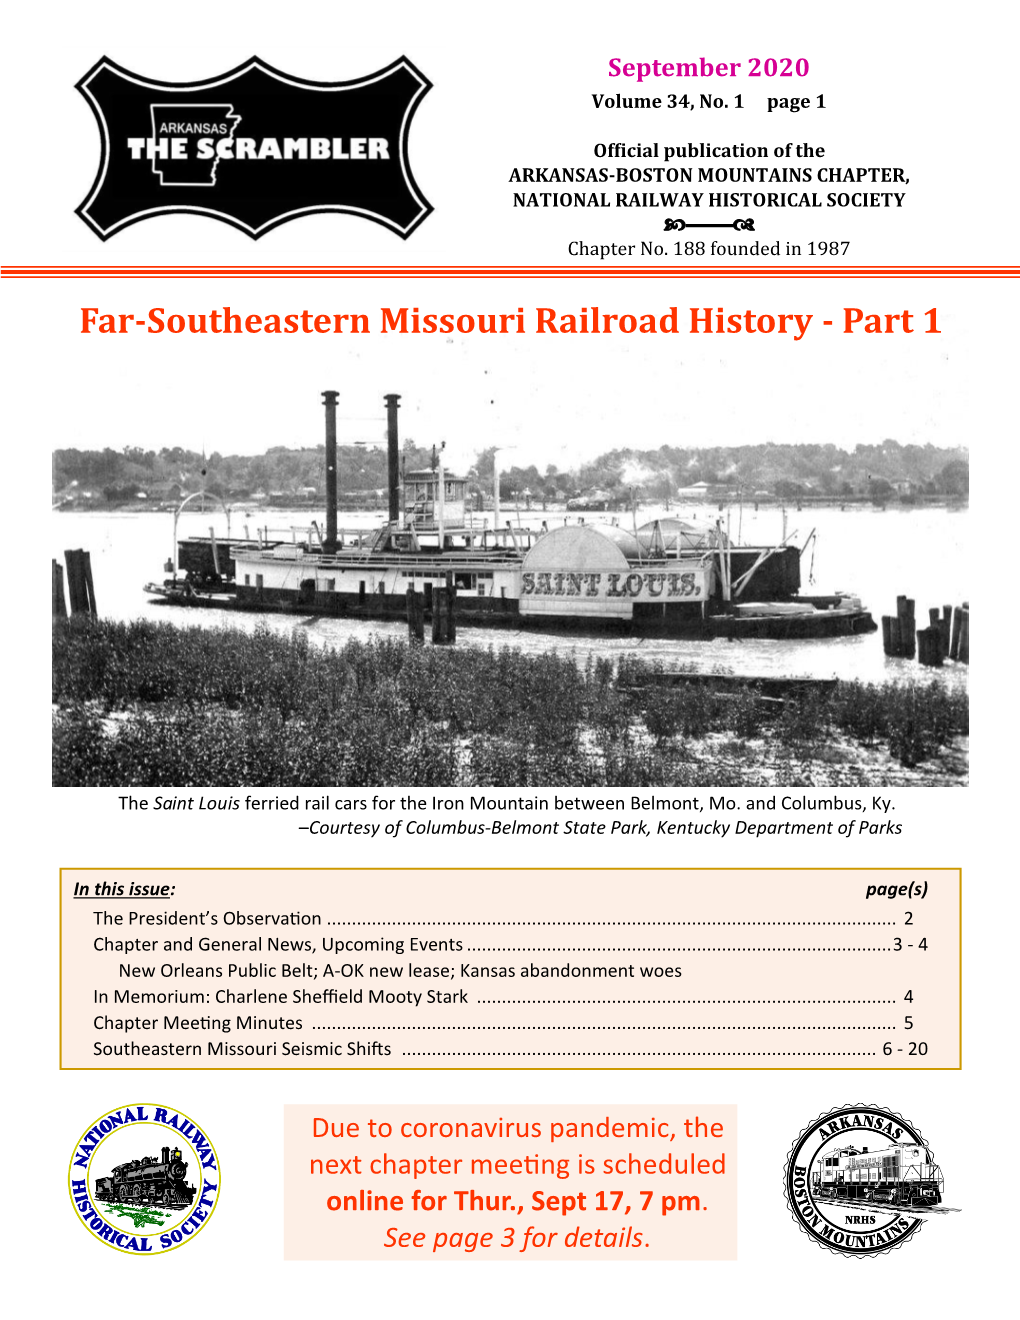 Far-Southeastern Missouri Railroad History - Part 1